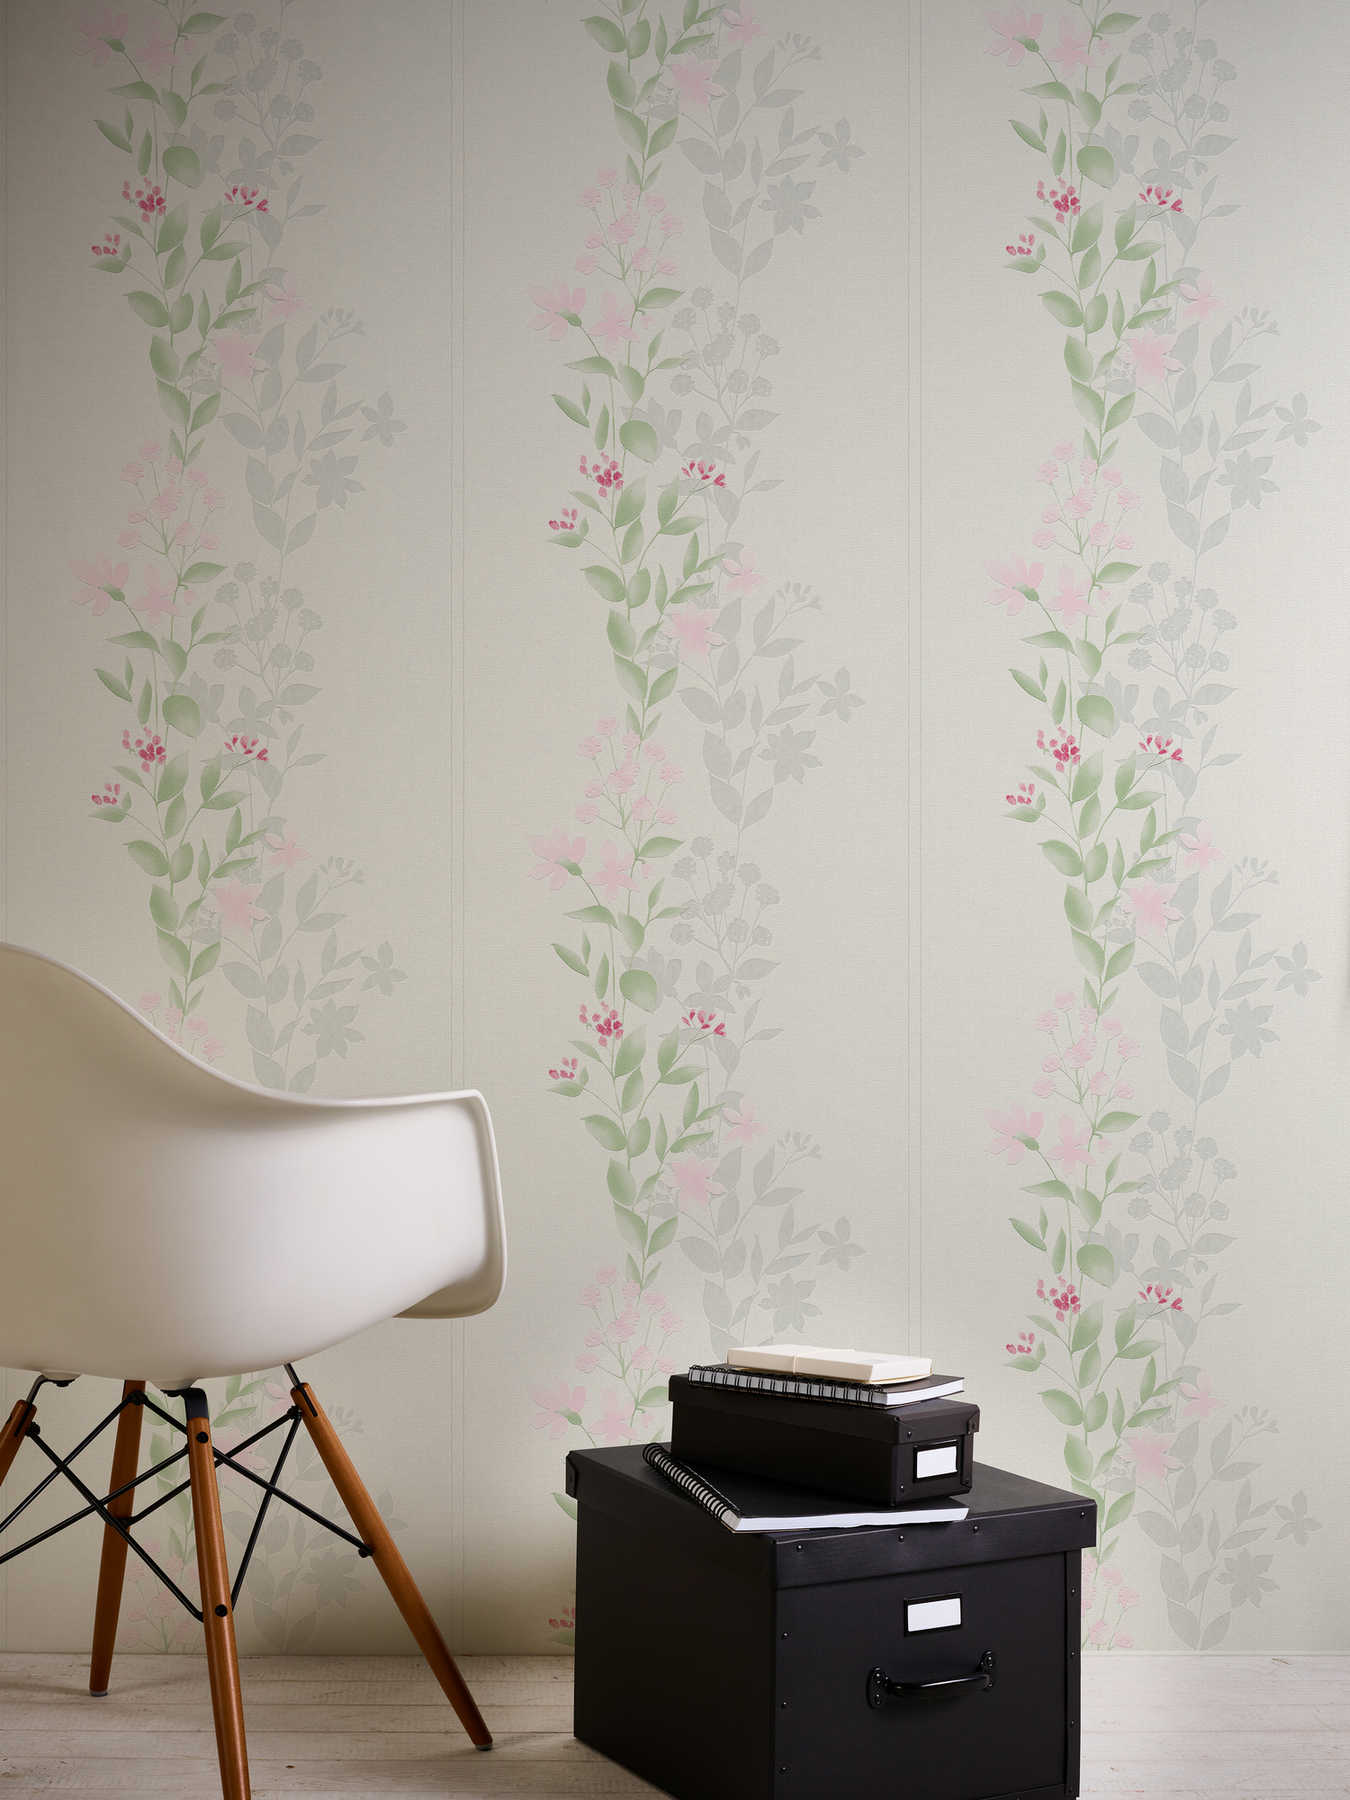             Wallpaper floral motif, watercolour effect - grey, green, pink
        